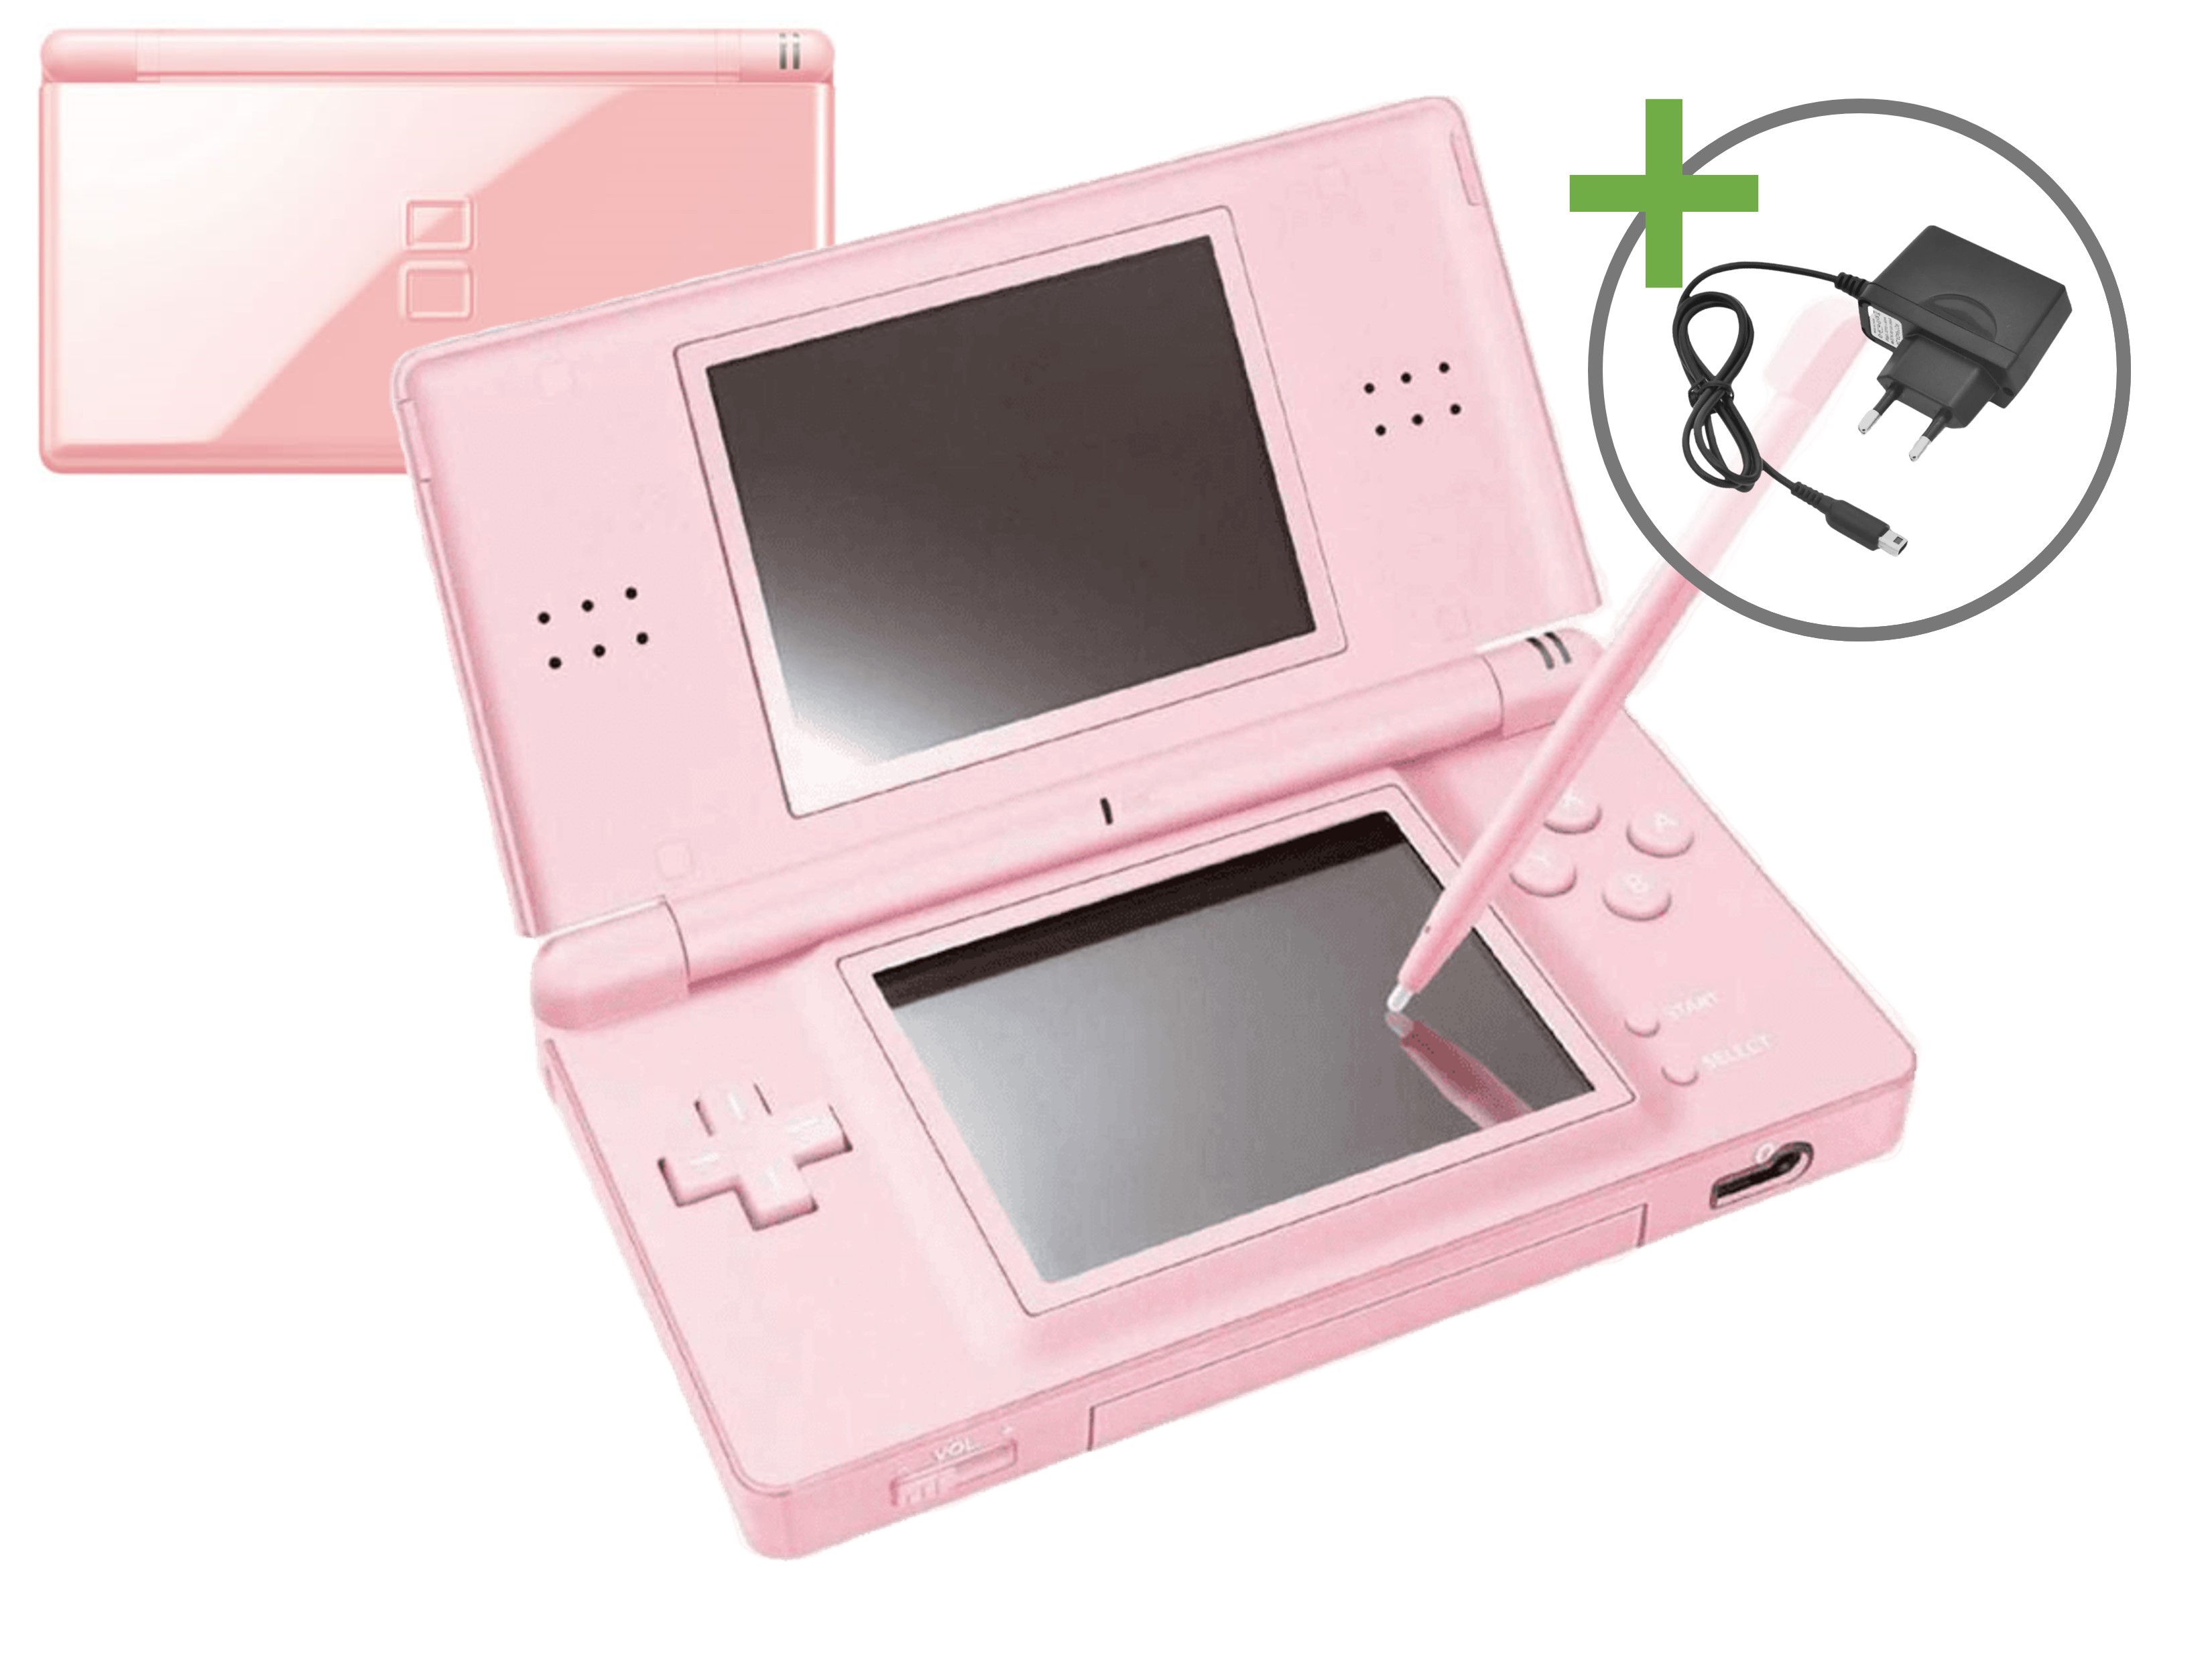 Nintendo DS Lite Pink - Nintendo DS Hardware